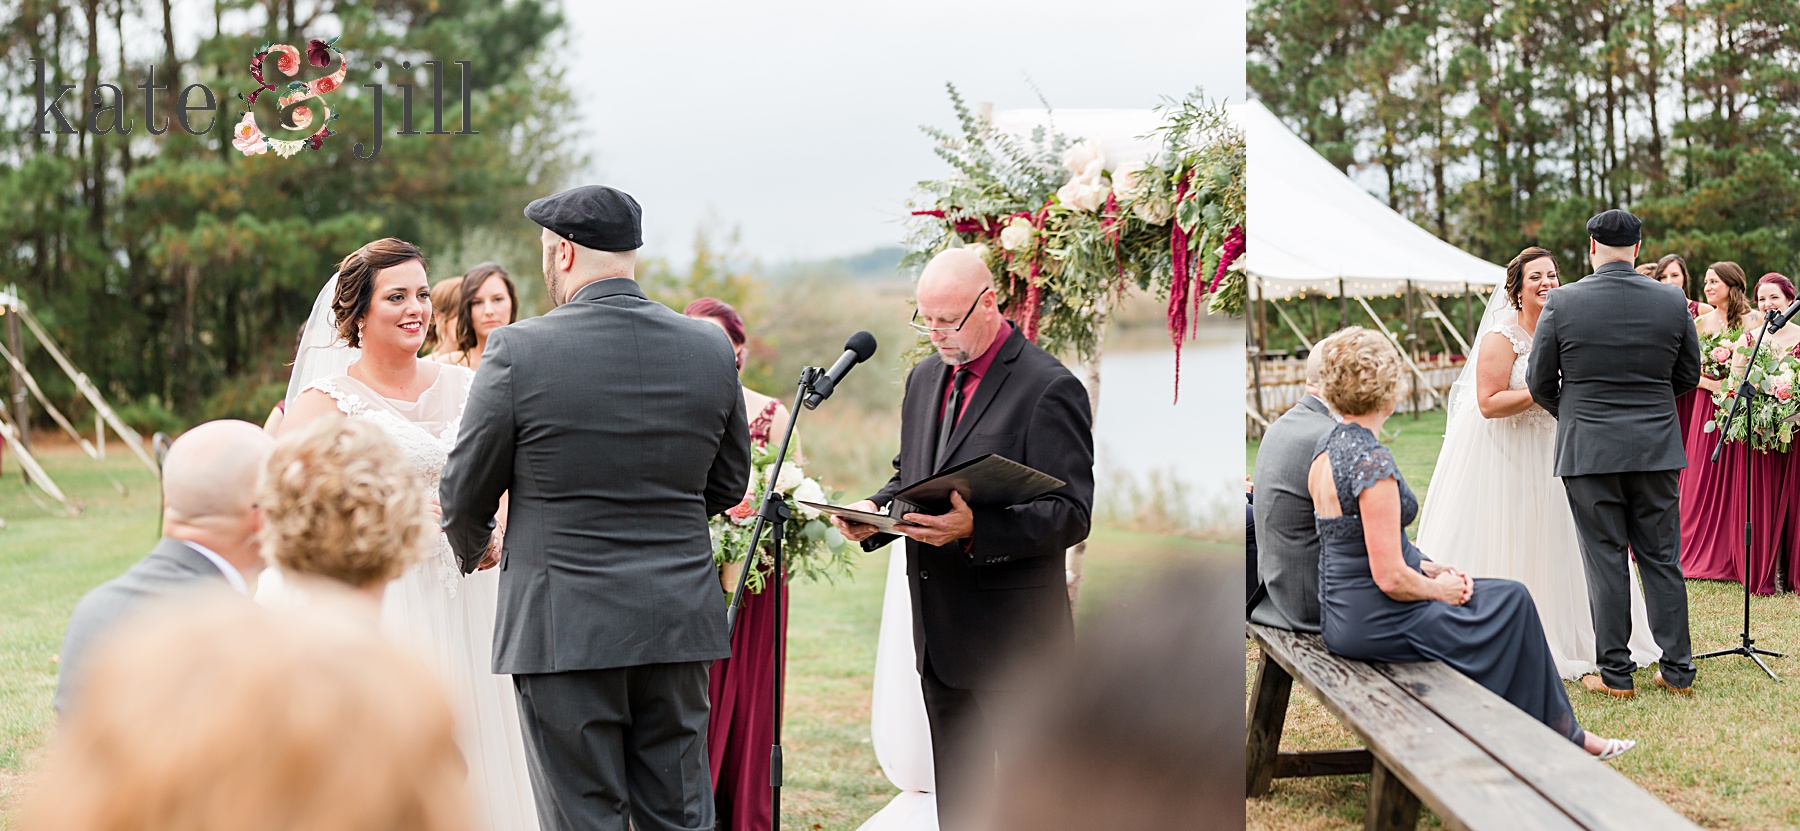 ceremony photos of bride and groom